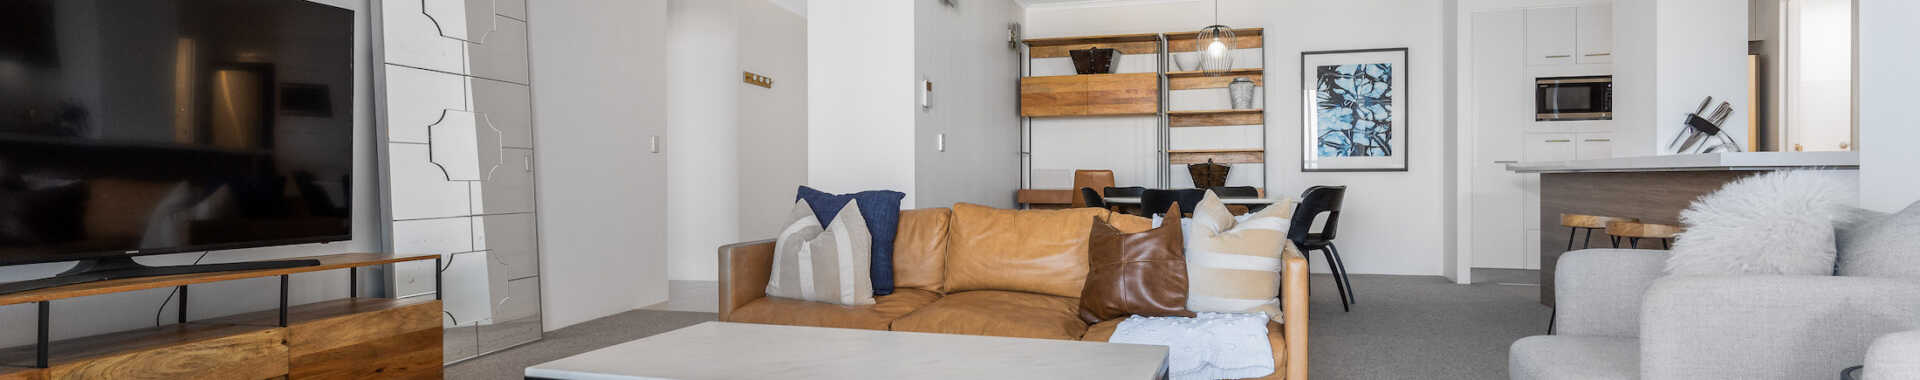 Astra Apartments 3 bedroom apartments Brisbane CBD accommodation